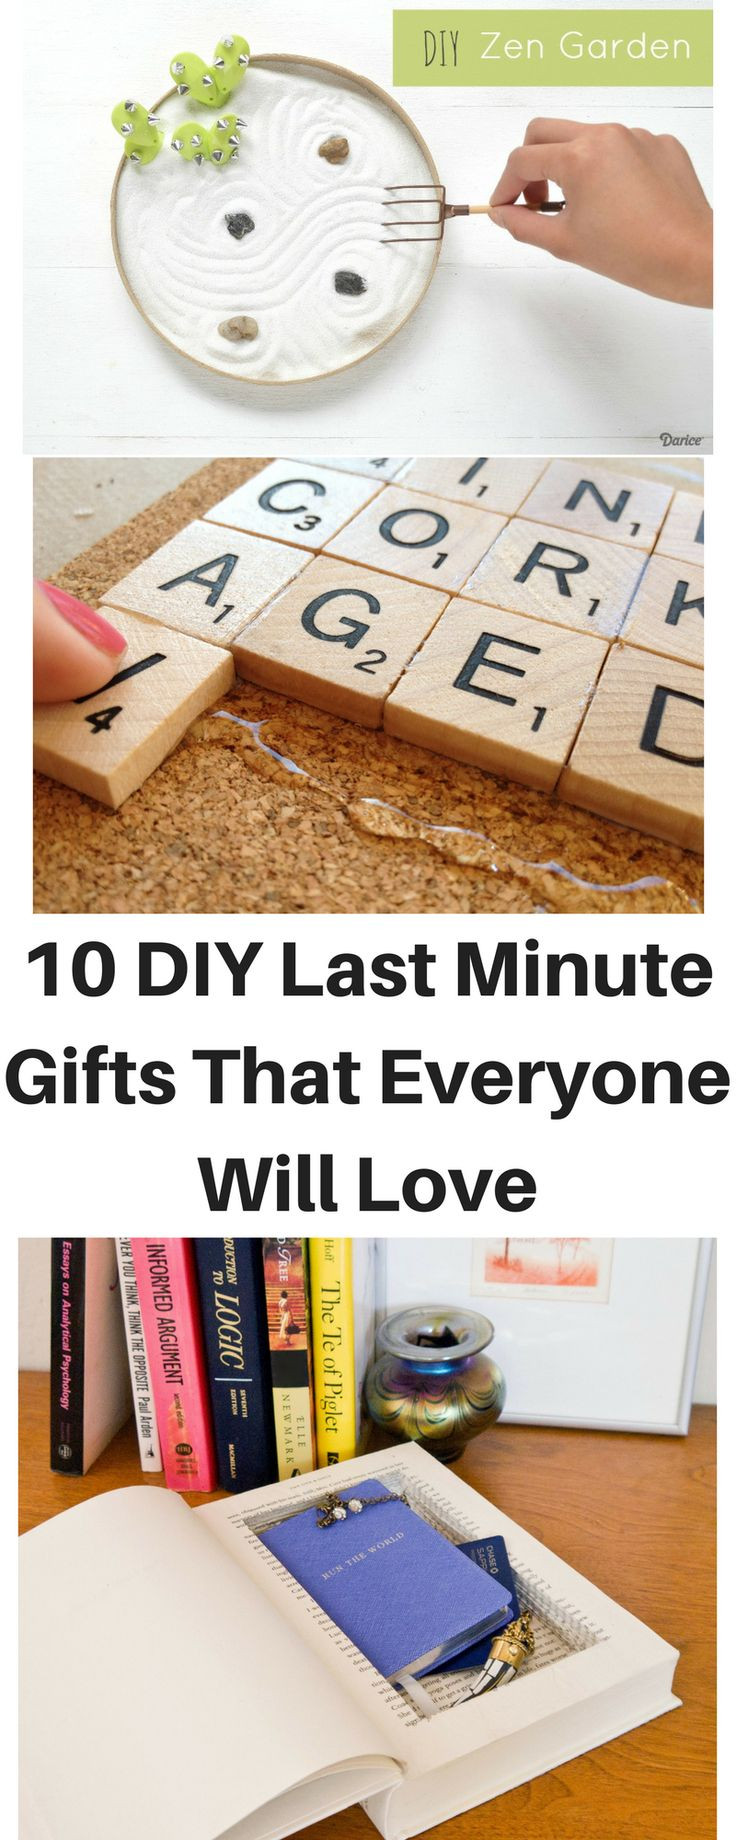 DIY Last Minute Christmas Gifts
 25 unique Last minute ts ideas on Pinterest